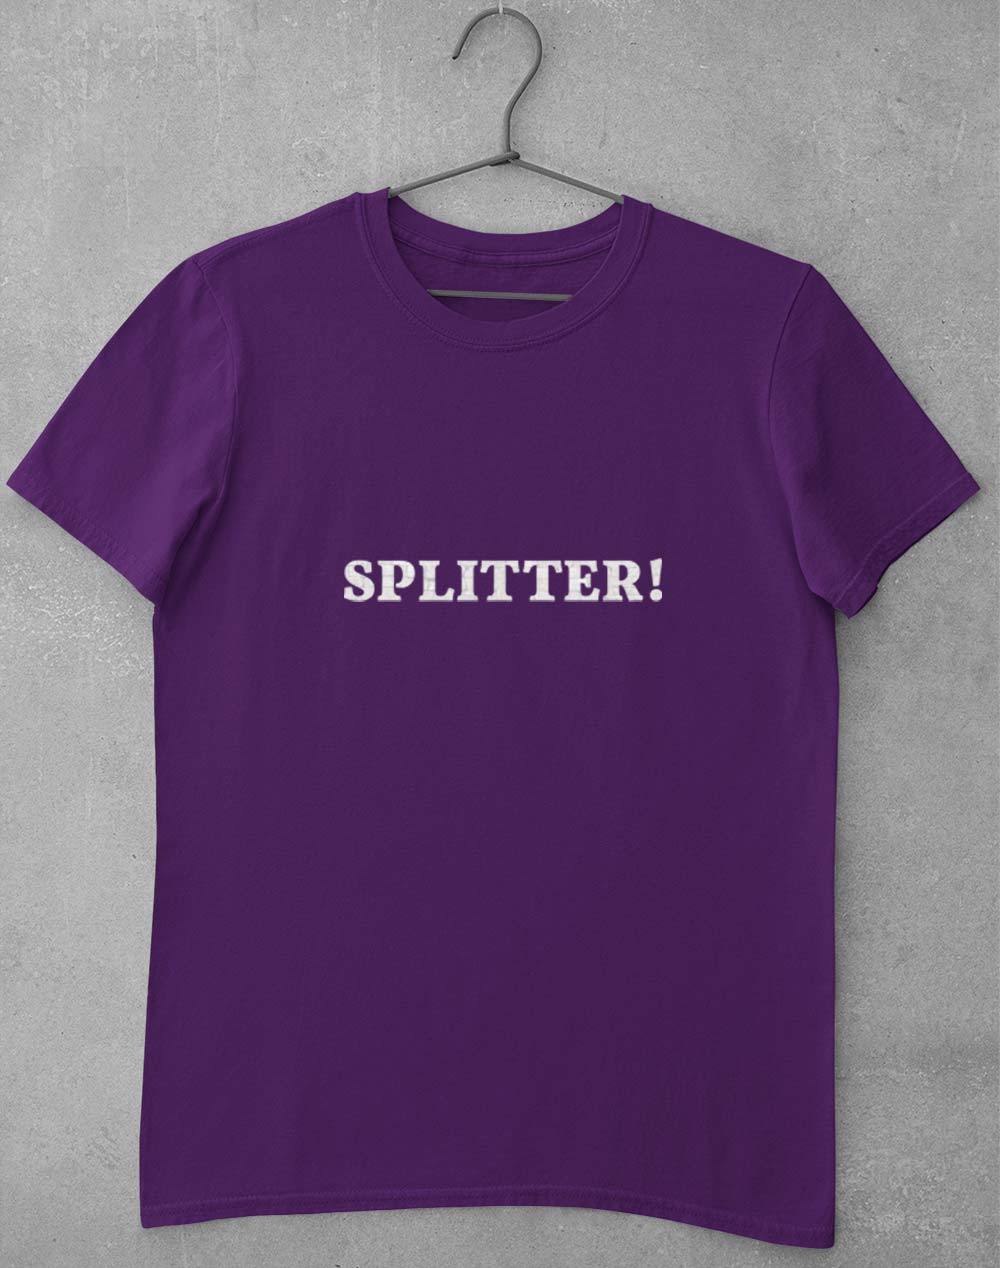 Splitter! T-Shirt S / Purple  - Off World Tees